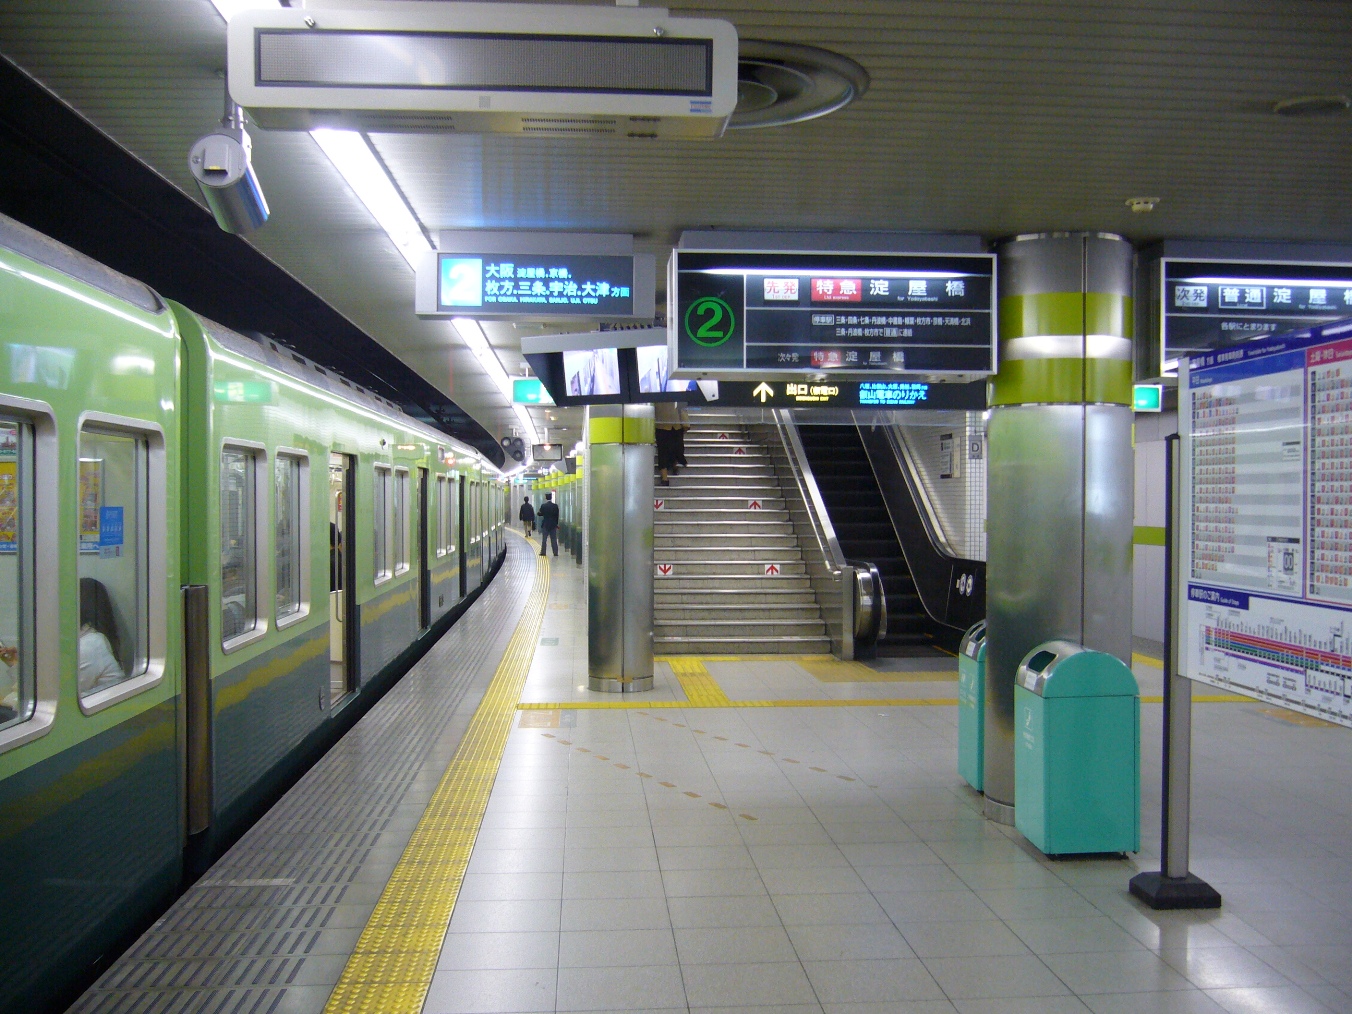 File:京阪出町柳駅ホーム.JPG - Wikimedia Commons